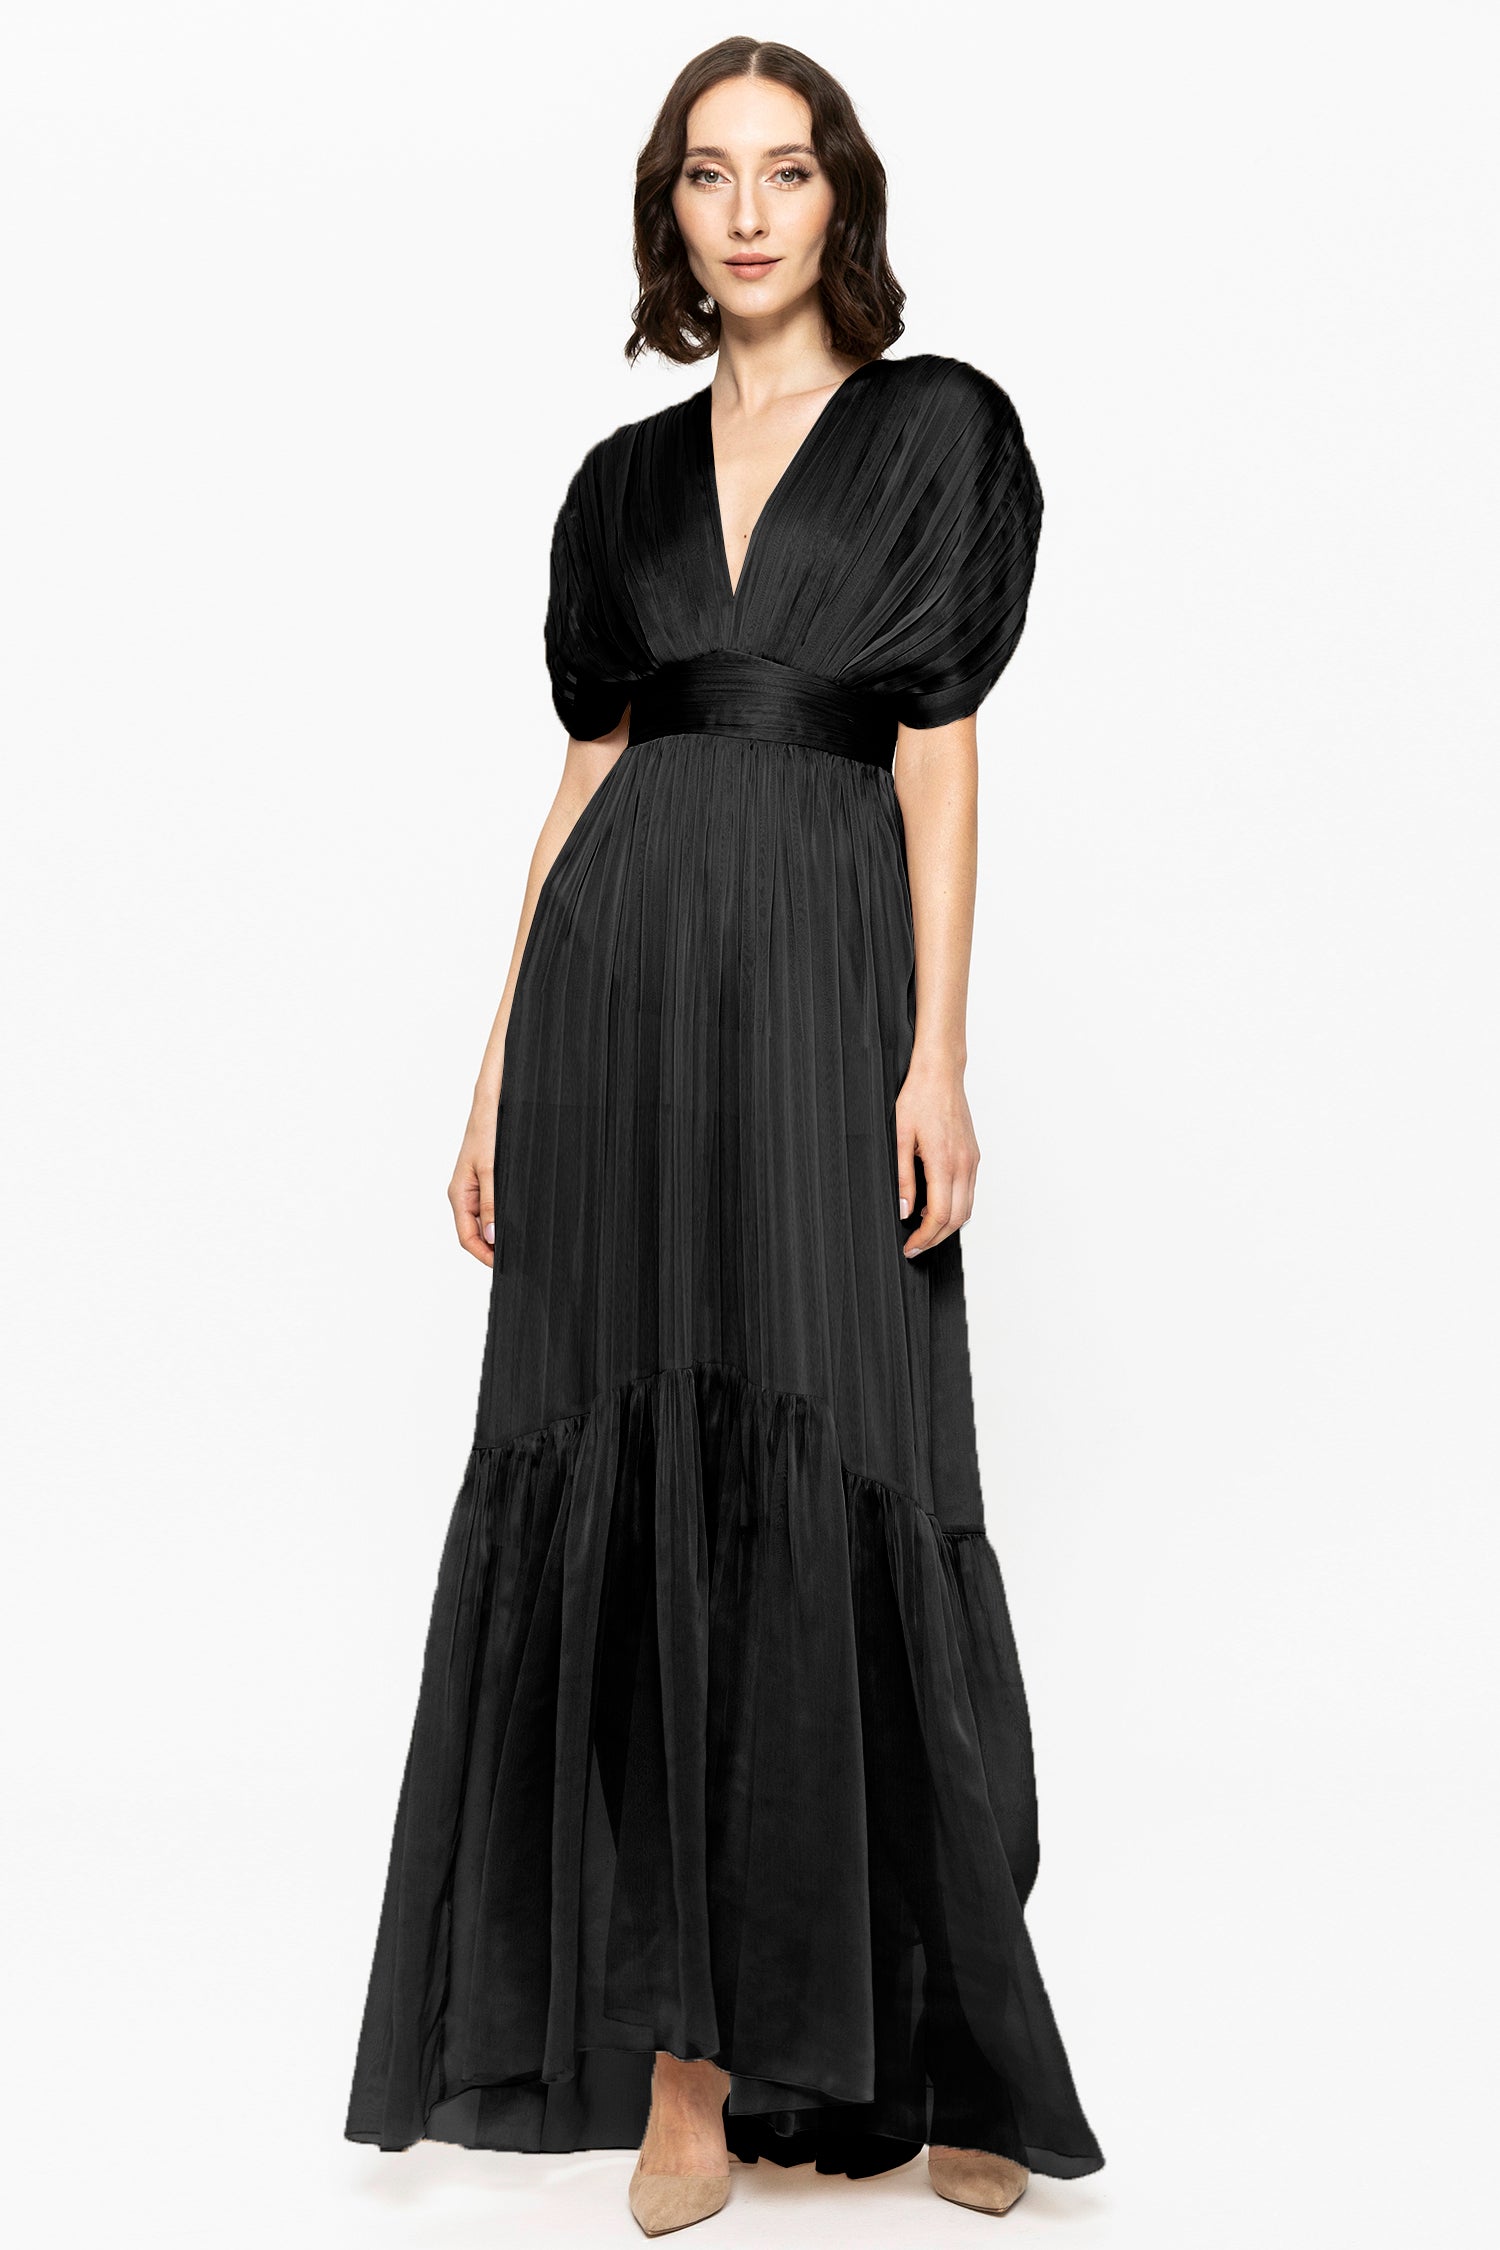 Lerena Chiffon Evening Gown Black